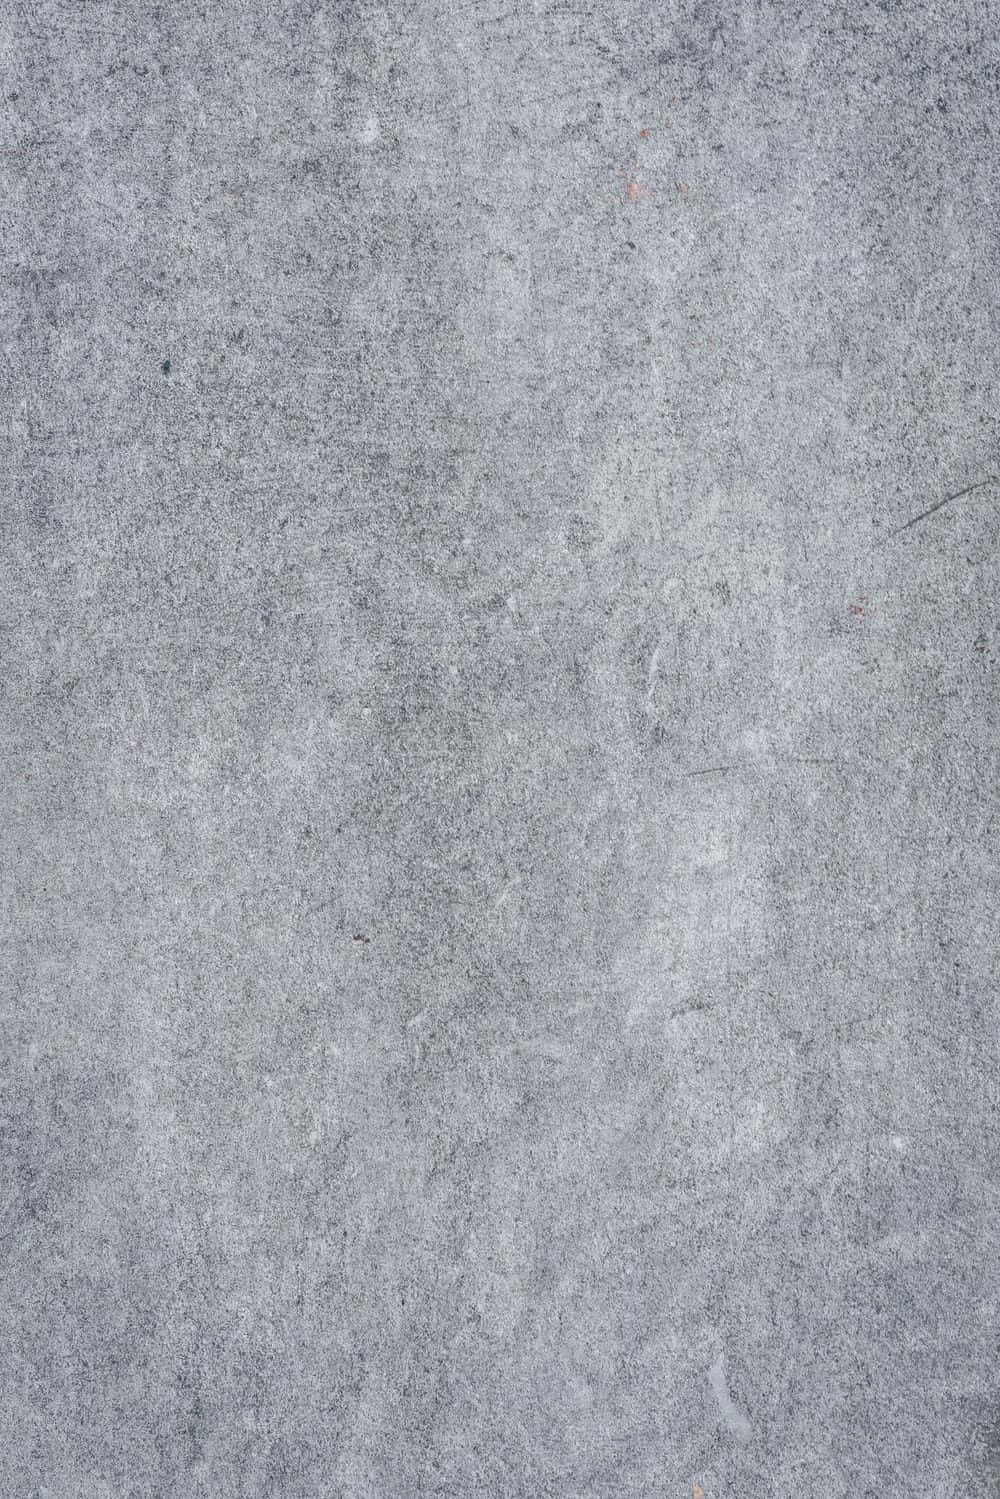 Dark and Spacious Grey Textured Wallpaper